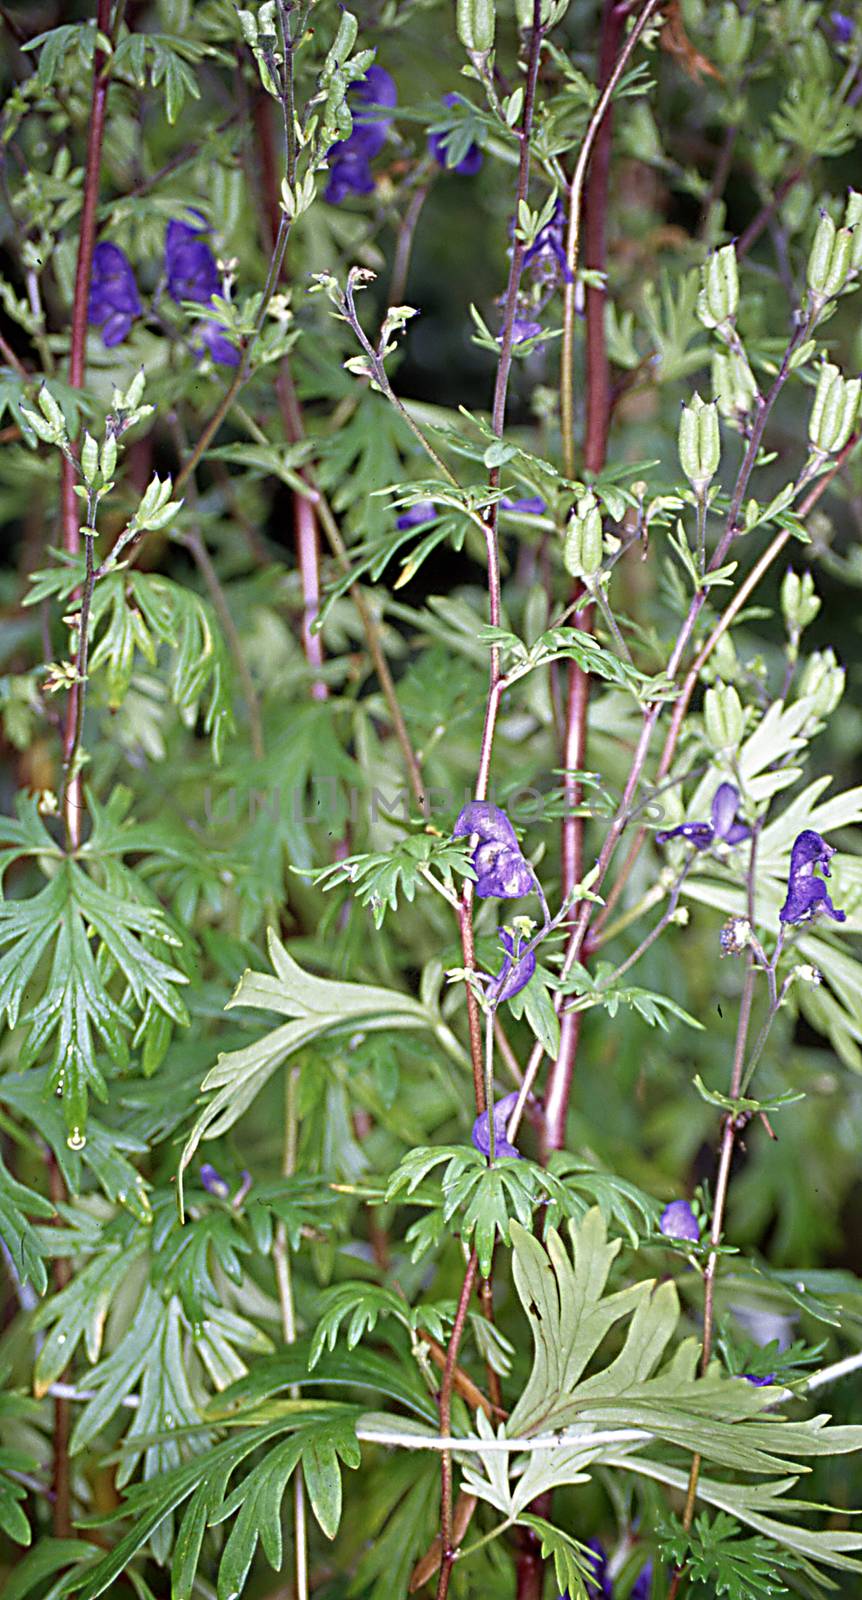 Monkshood shrubs with blue flowers